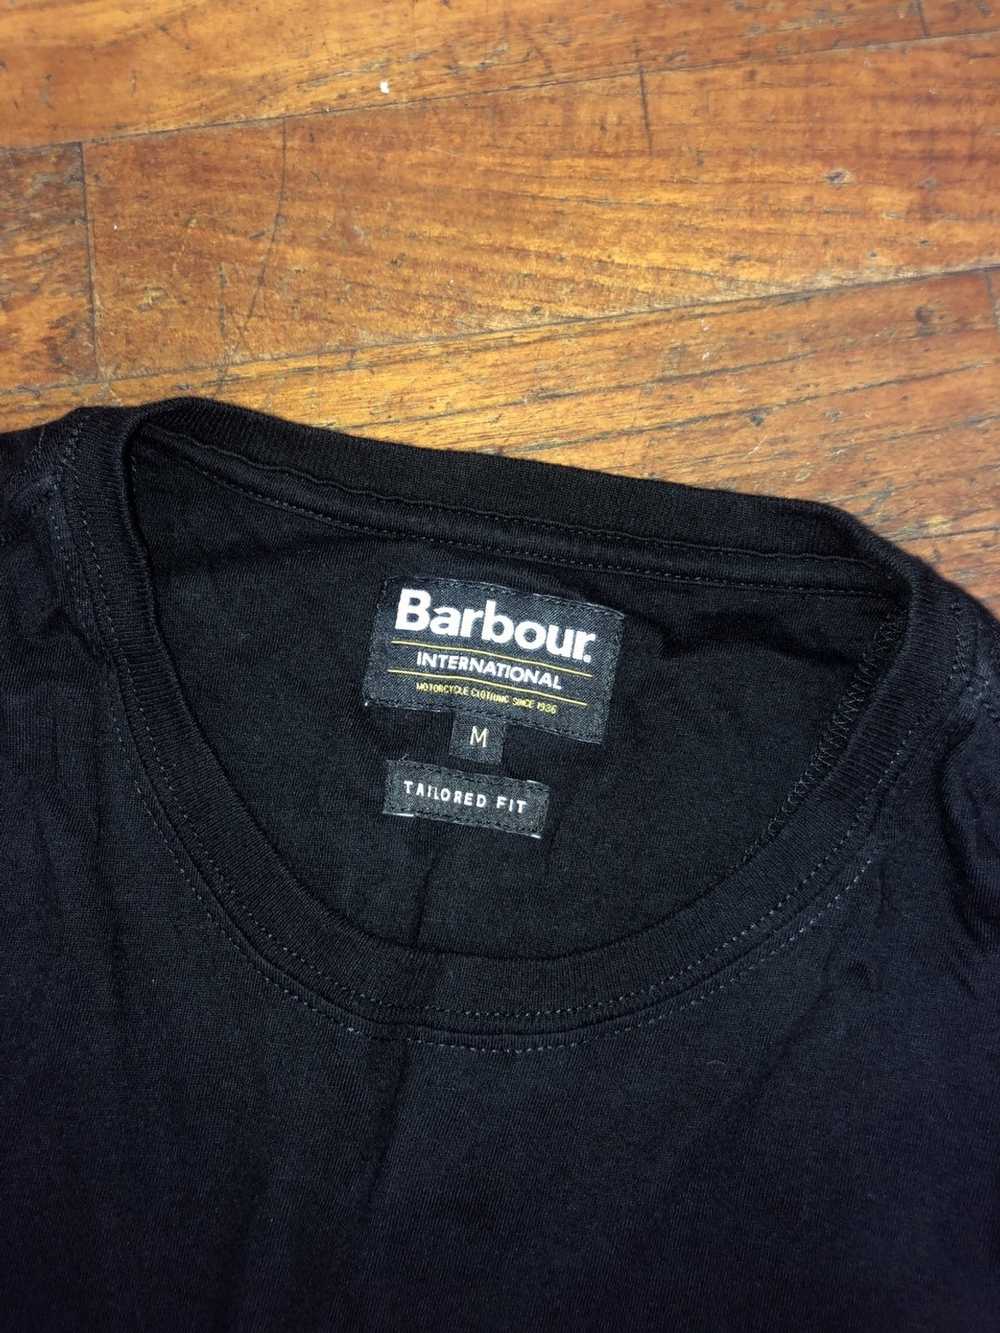 Barbour Barbour International T-shirt - image 3